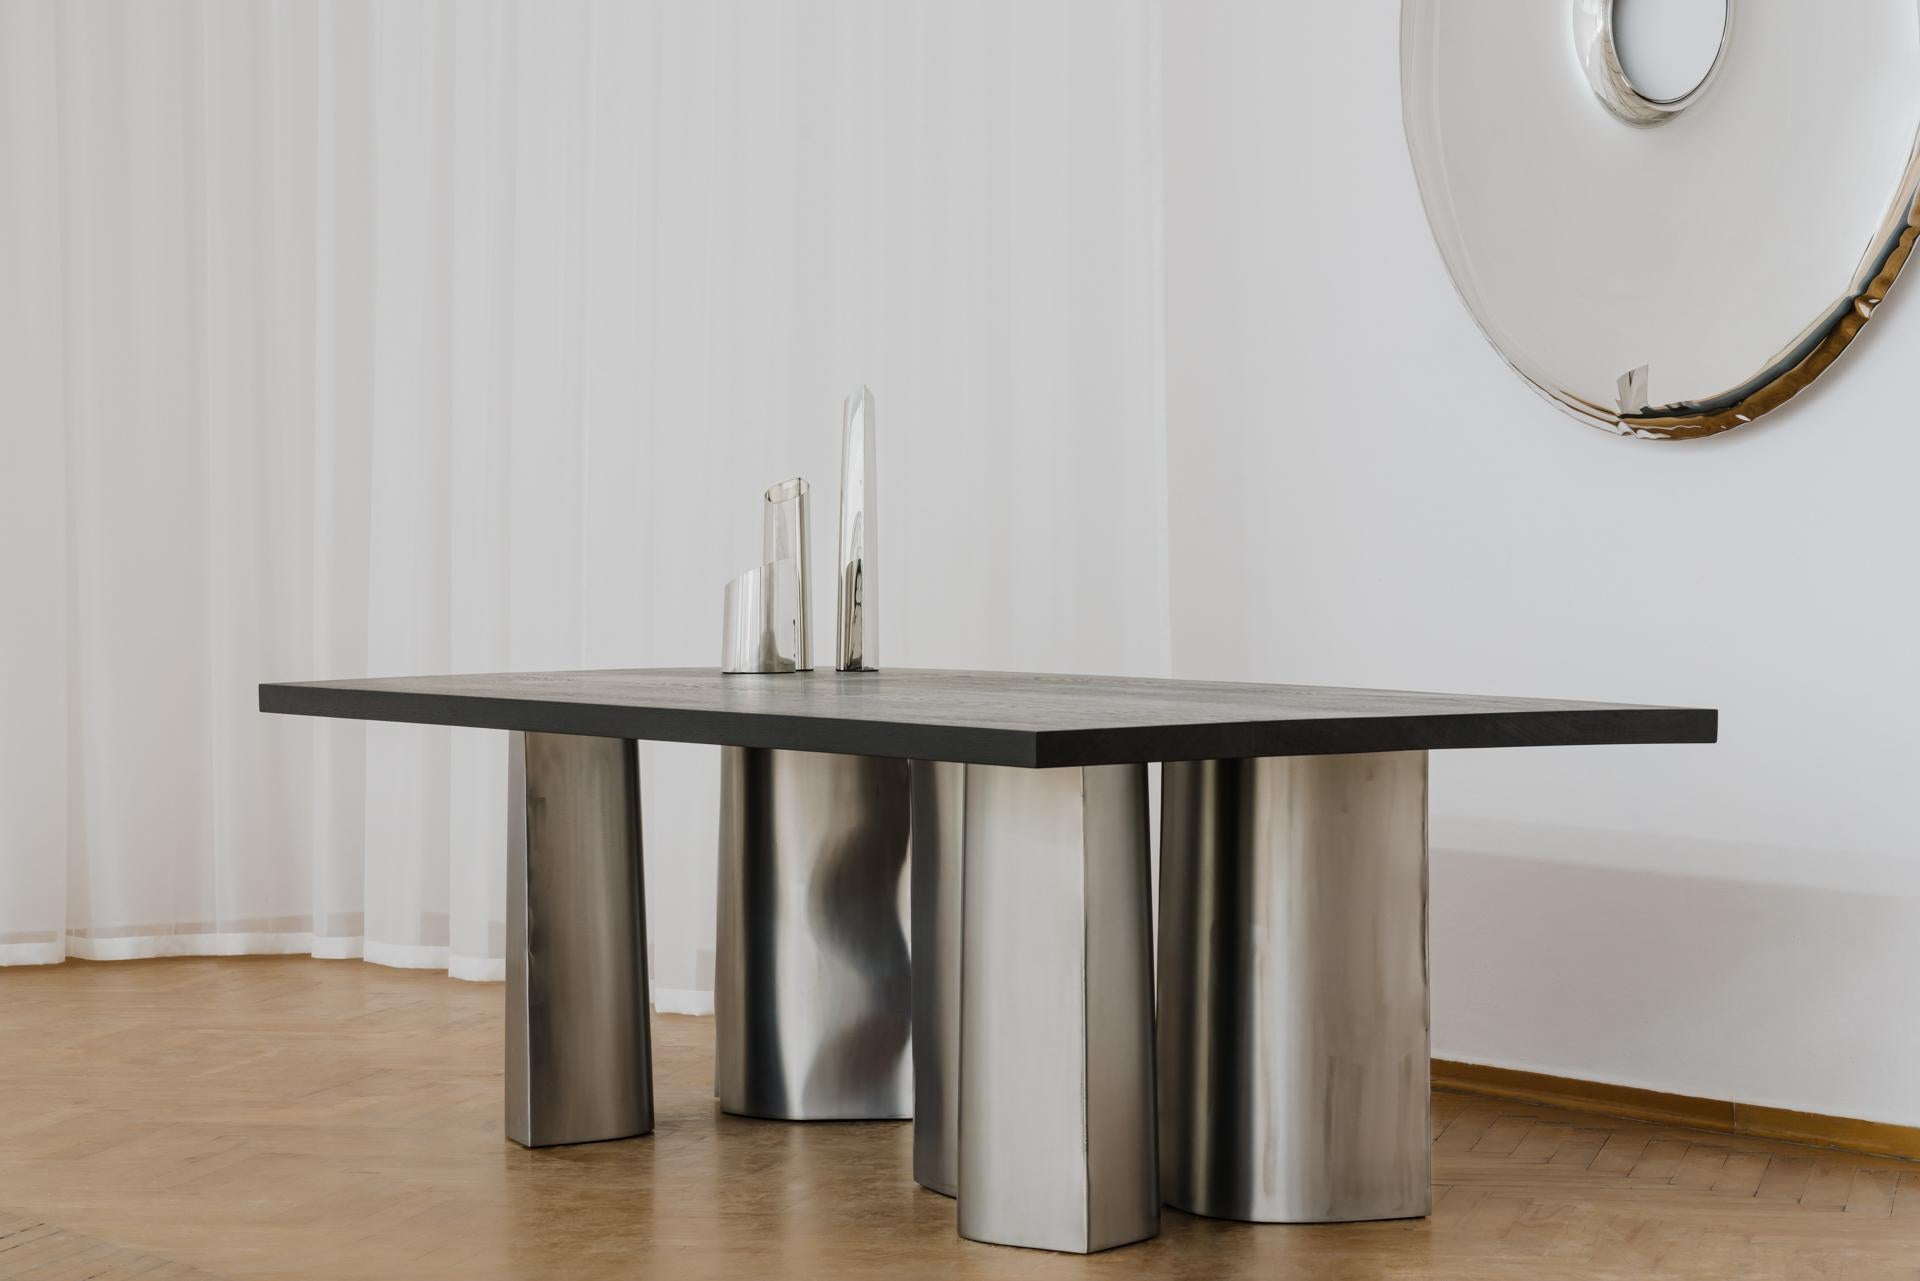 Polish Contemporary Dining Table 'Parova' by Zieta, Stainless Steel & Dark Oak For Sale